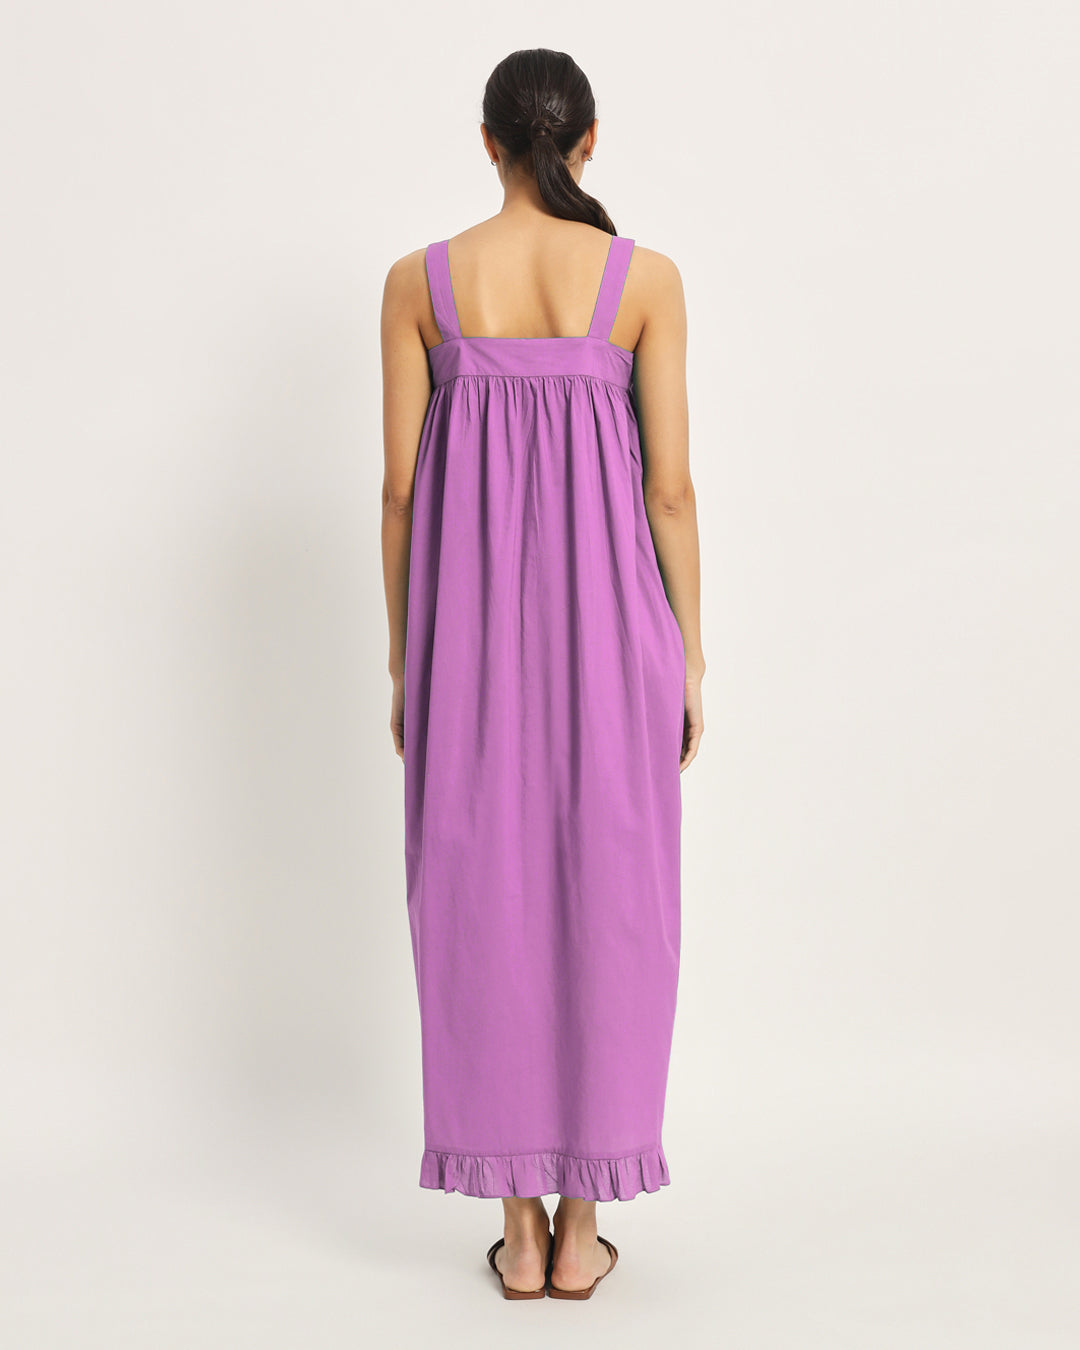 Combo: Lilac & Wisteria Purple Preggo Pretty Maternity & Nursing Dress